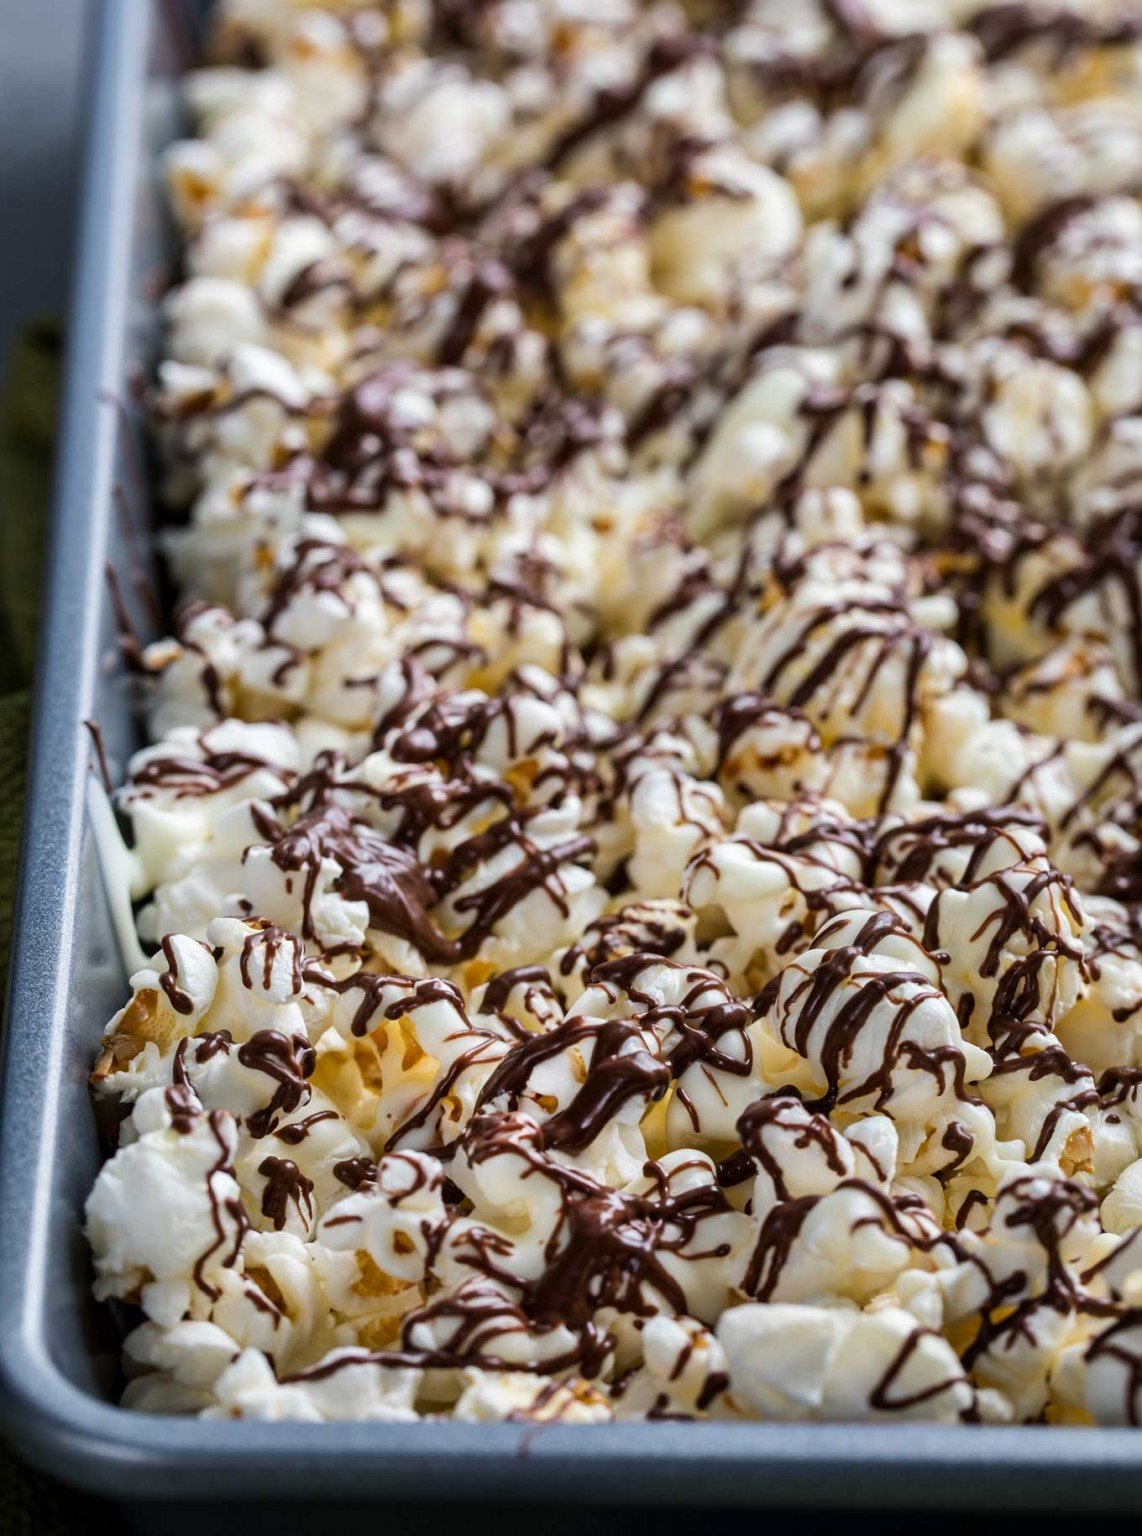 Chocolate Covered Popcorn (white and dark) - The Chunky Chef